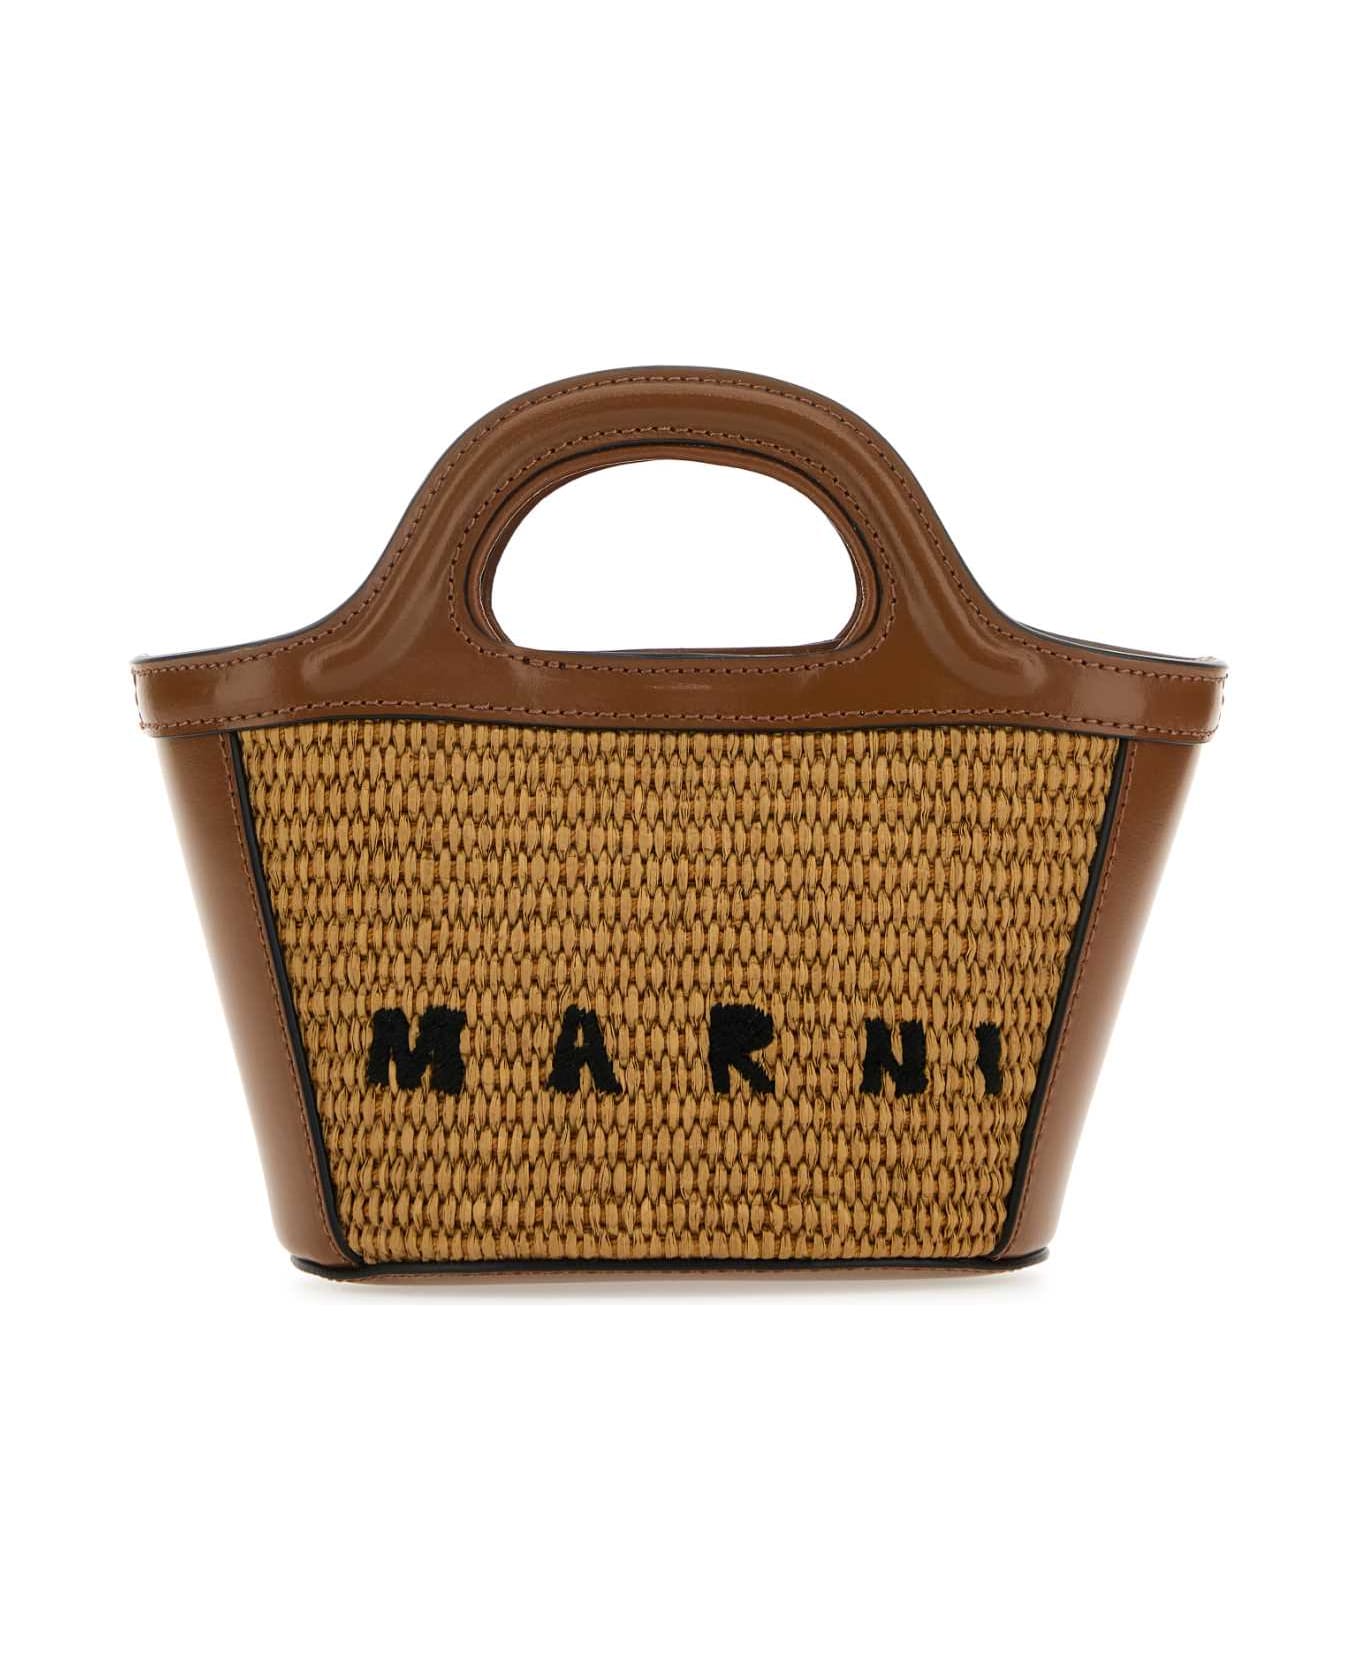 Marni Two-tone Leather And Straw Tropicalia Handbag - RAW SIENNA